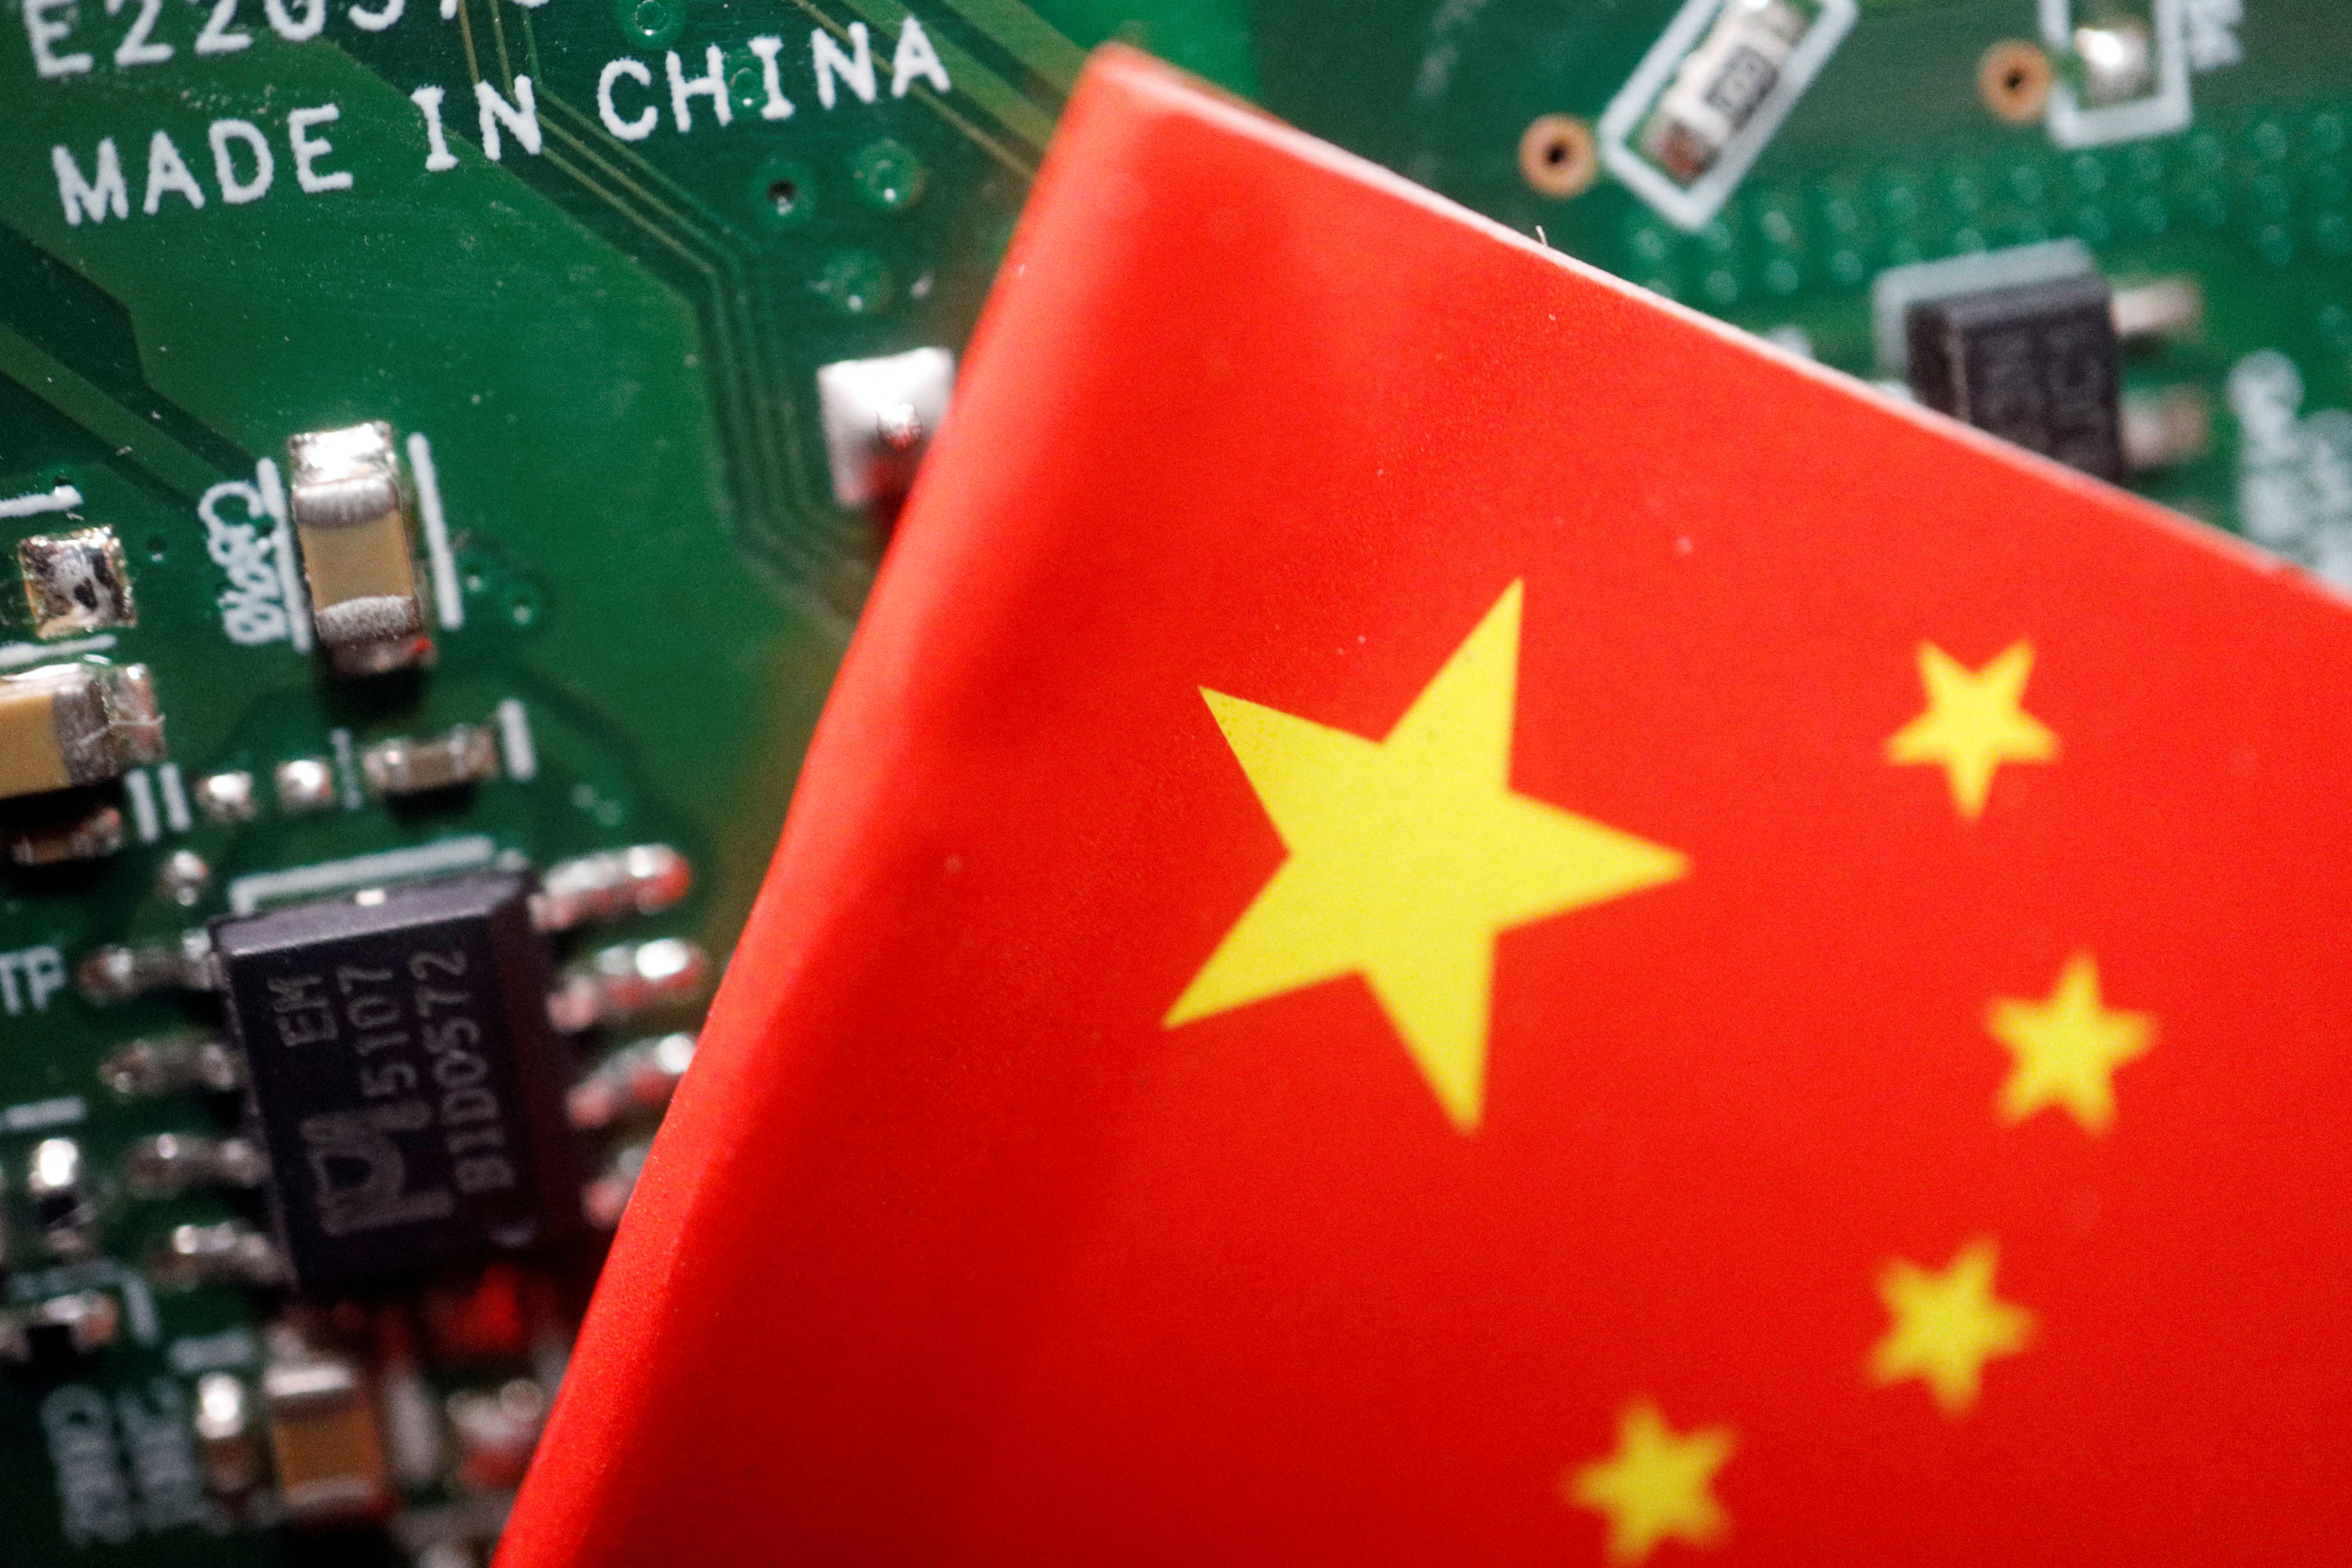 Imagen ilustrativa de la bandera china con chips semiconductores